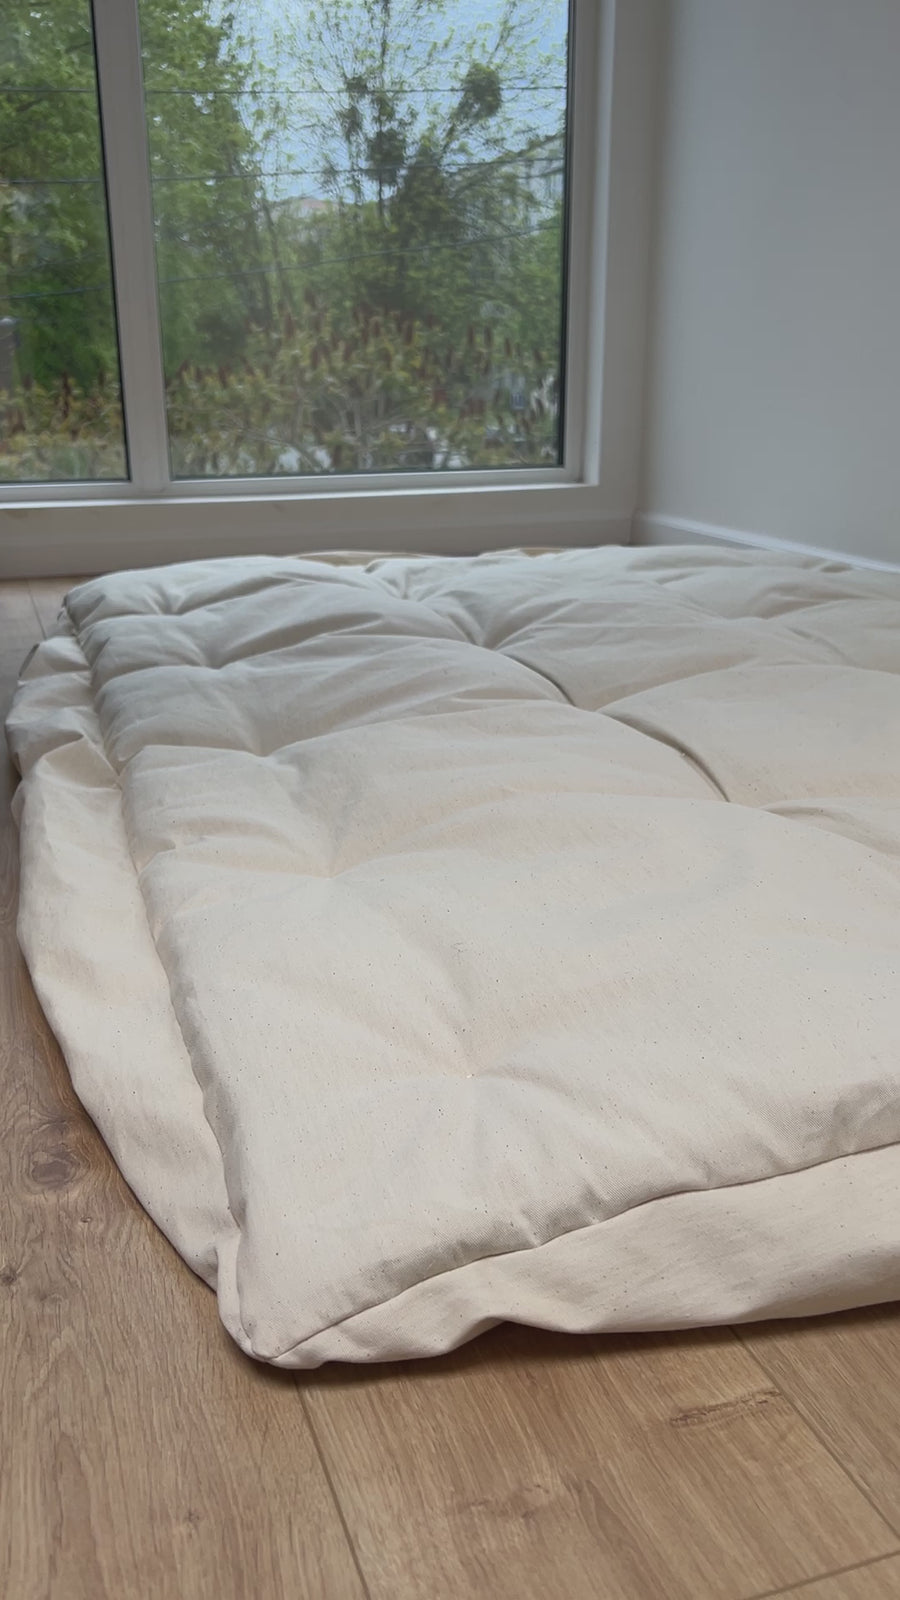 HEMP topper-mattress pad like fitted sheet mat 1.5” thickness filled organic hemp fiber filler in natural non-dyed Cotton fabric Custom Size Hand made